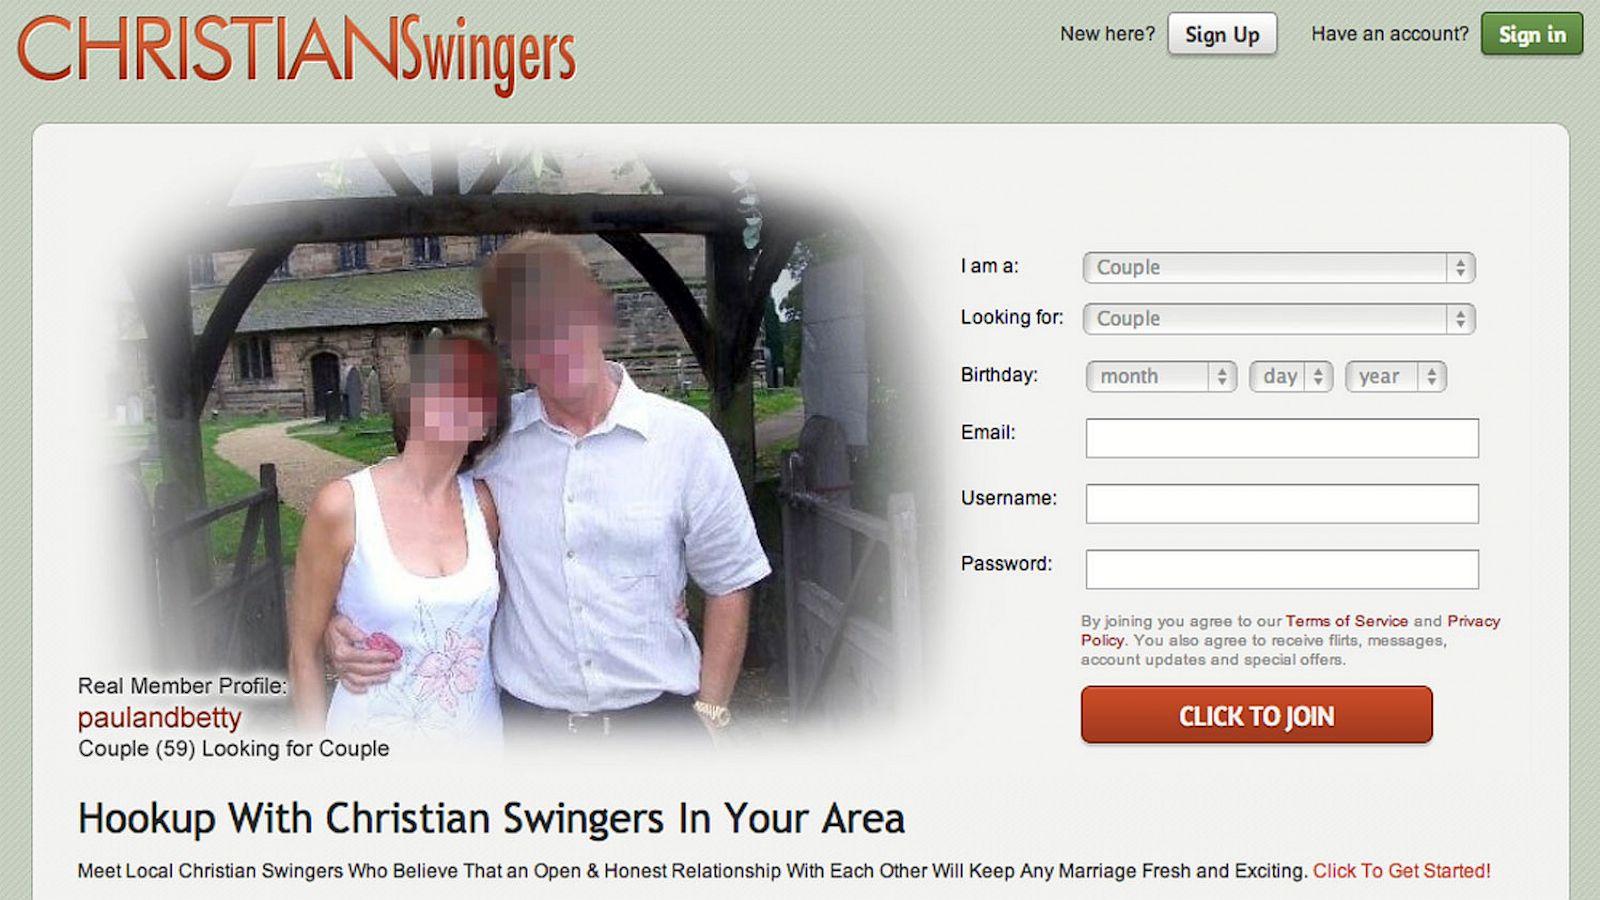 Christian Swingers? Even Progressive Pastors Are Shocked pic